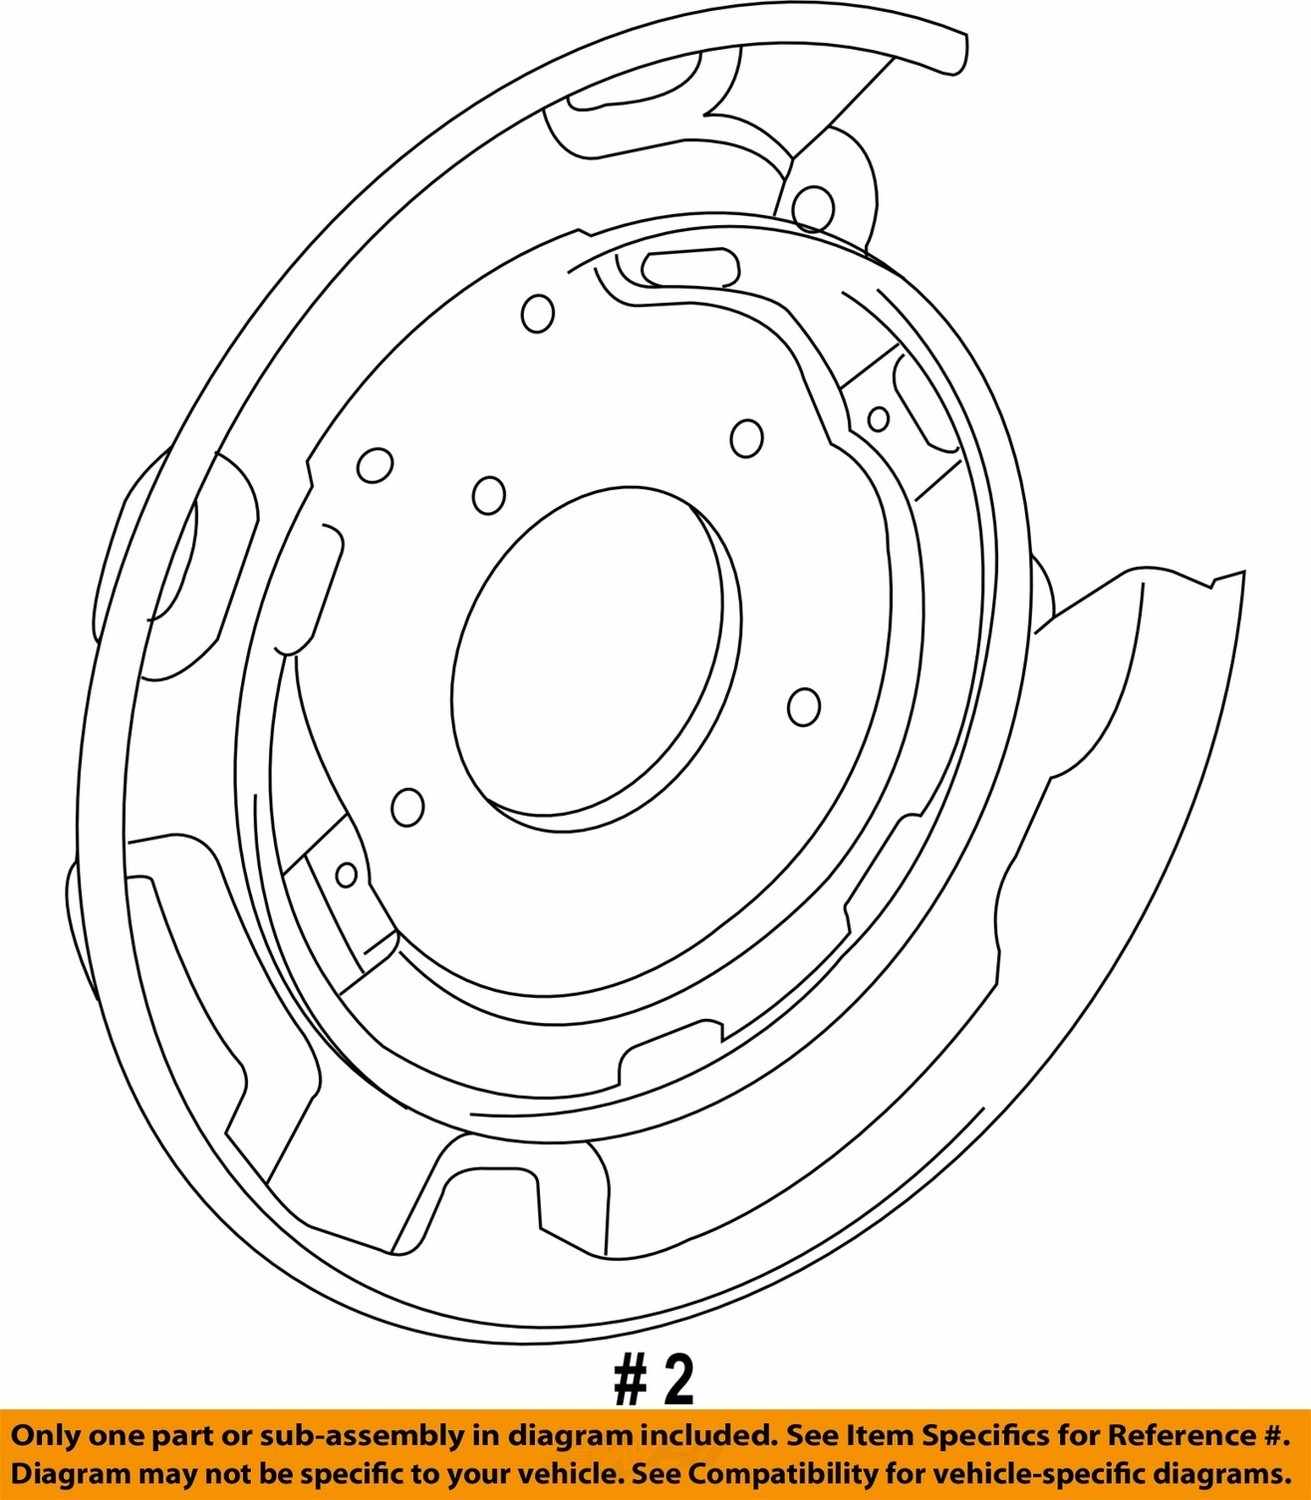 TOYOTA OEM 07-15 Tundra Rear Brake-Backing Plate Splash Dust Shield